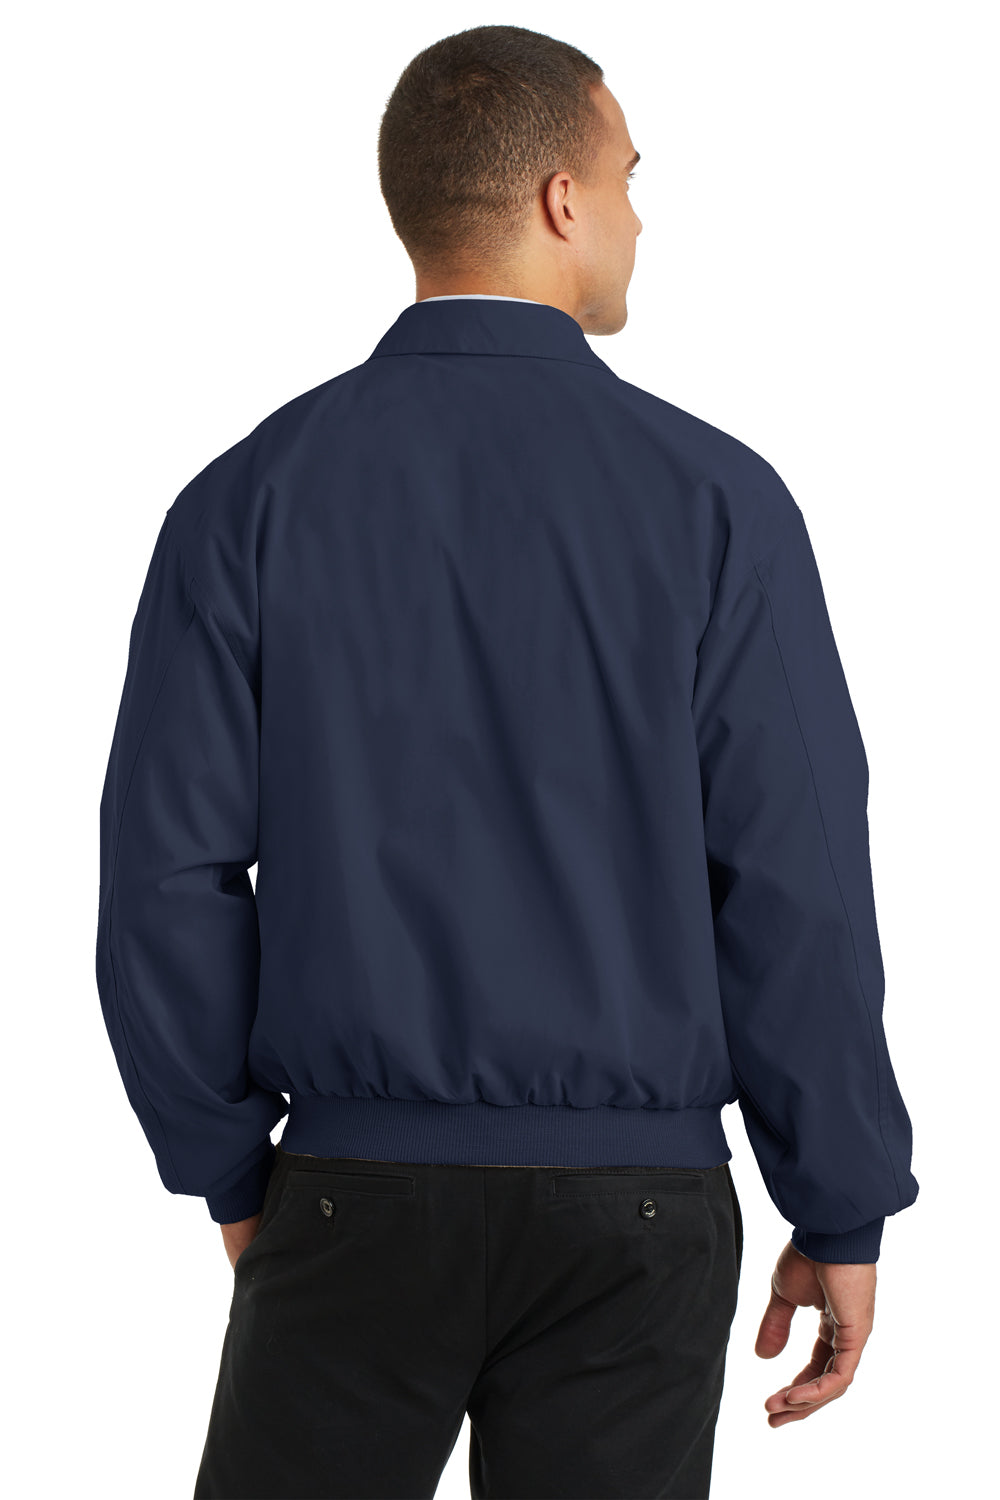 Port Authority J730 Mens Casual Wind & Water Resistant Full Zip Microfiber Jacket Navy Blue Back